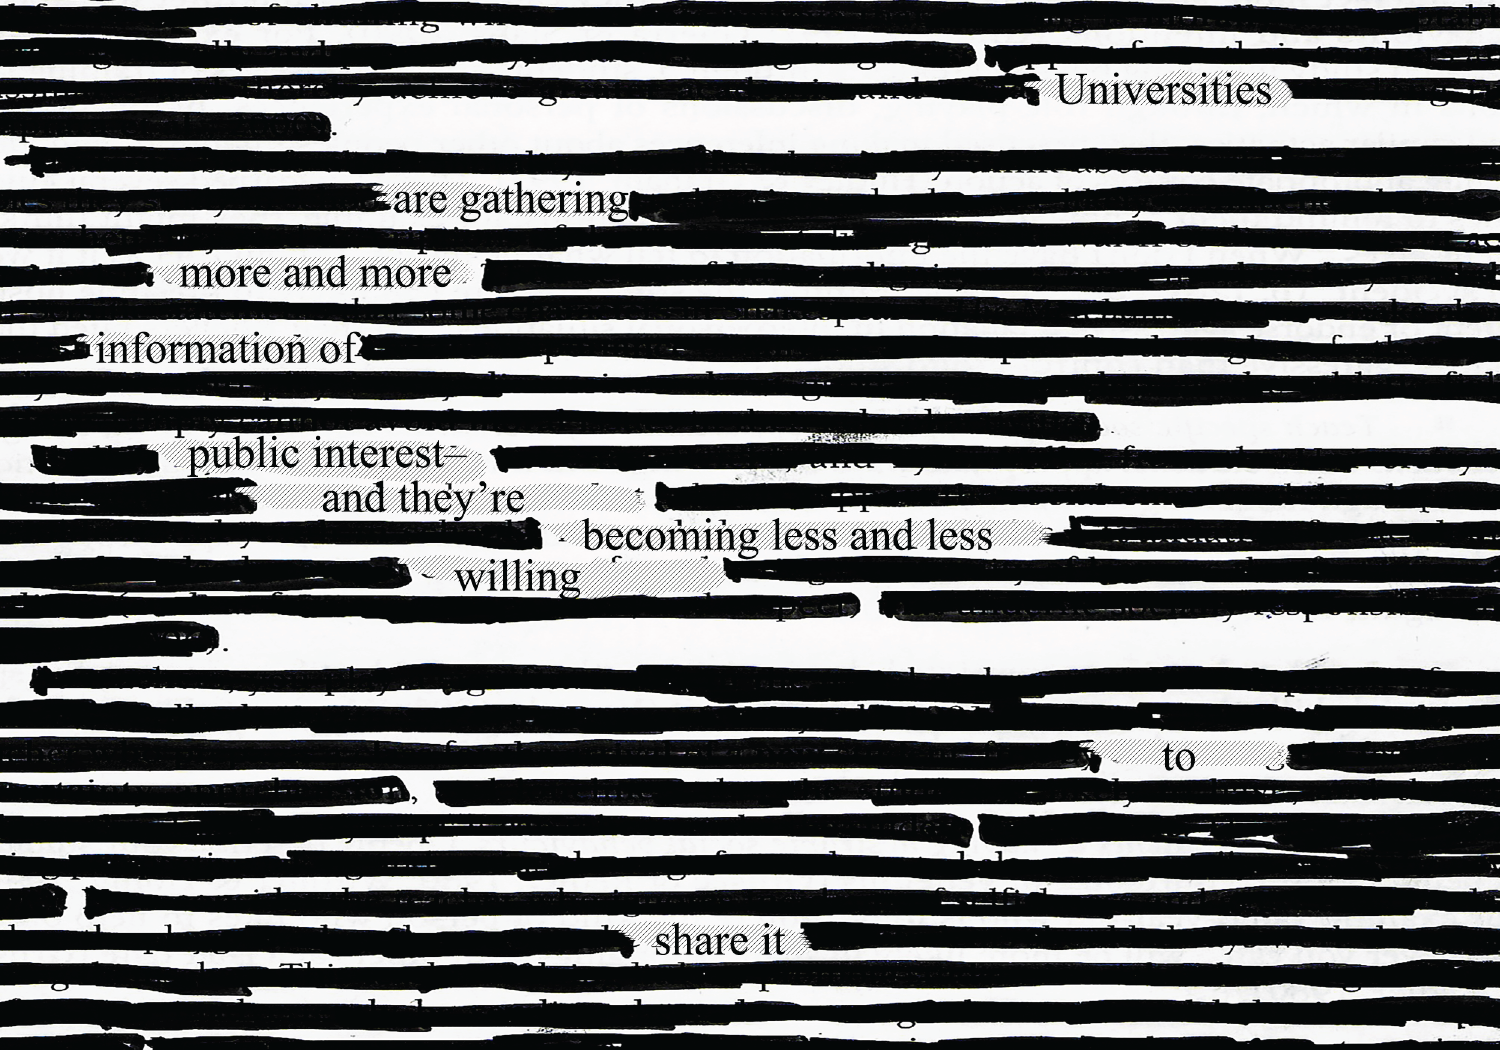 redacted data